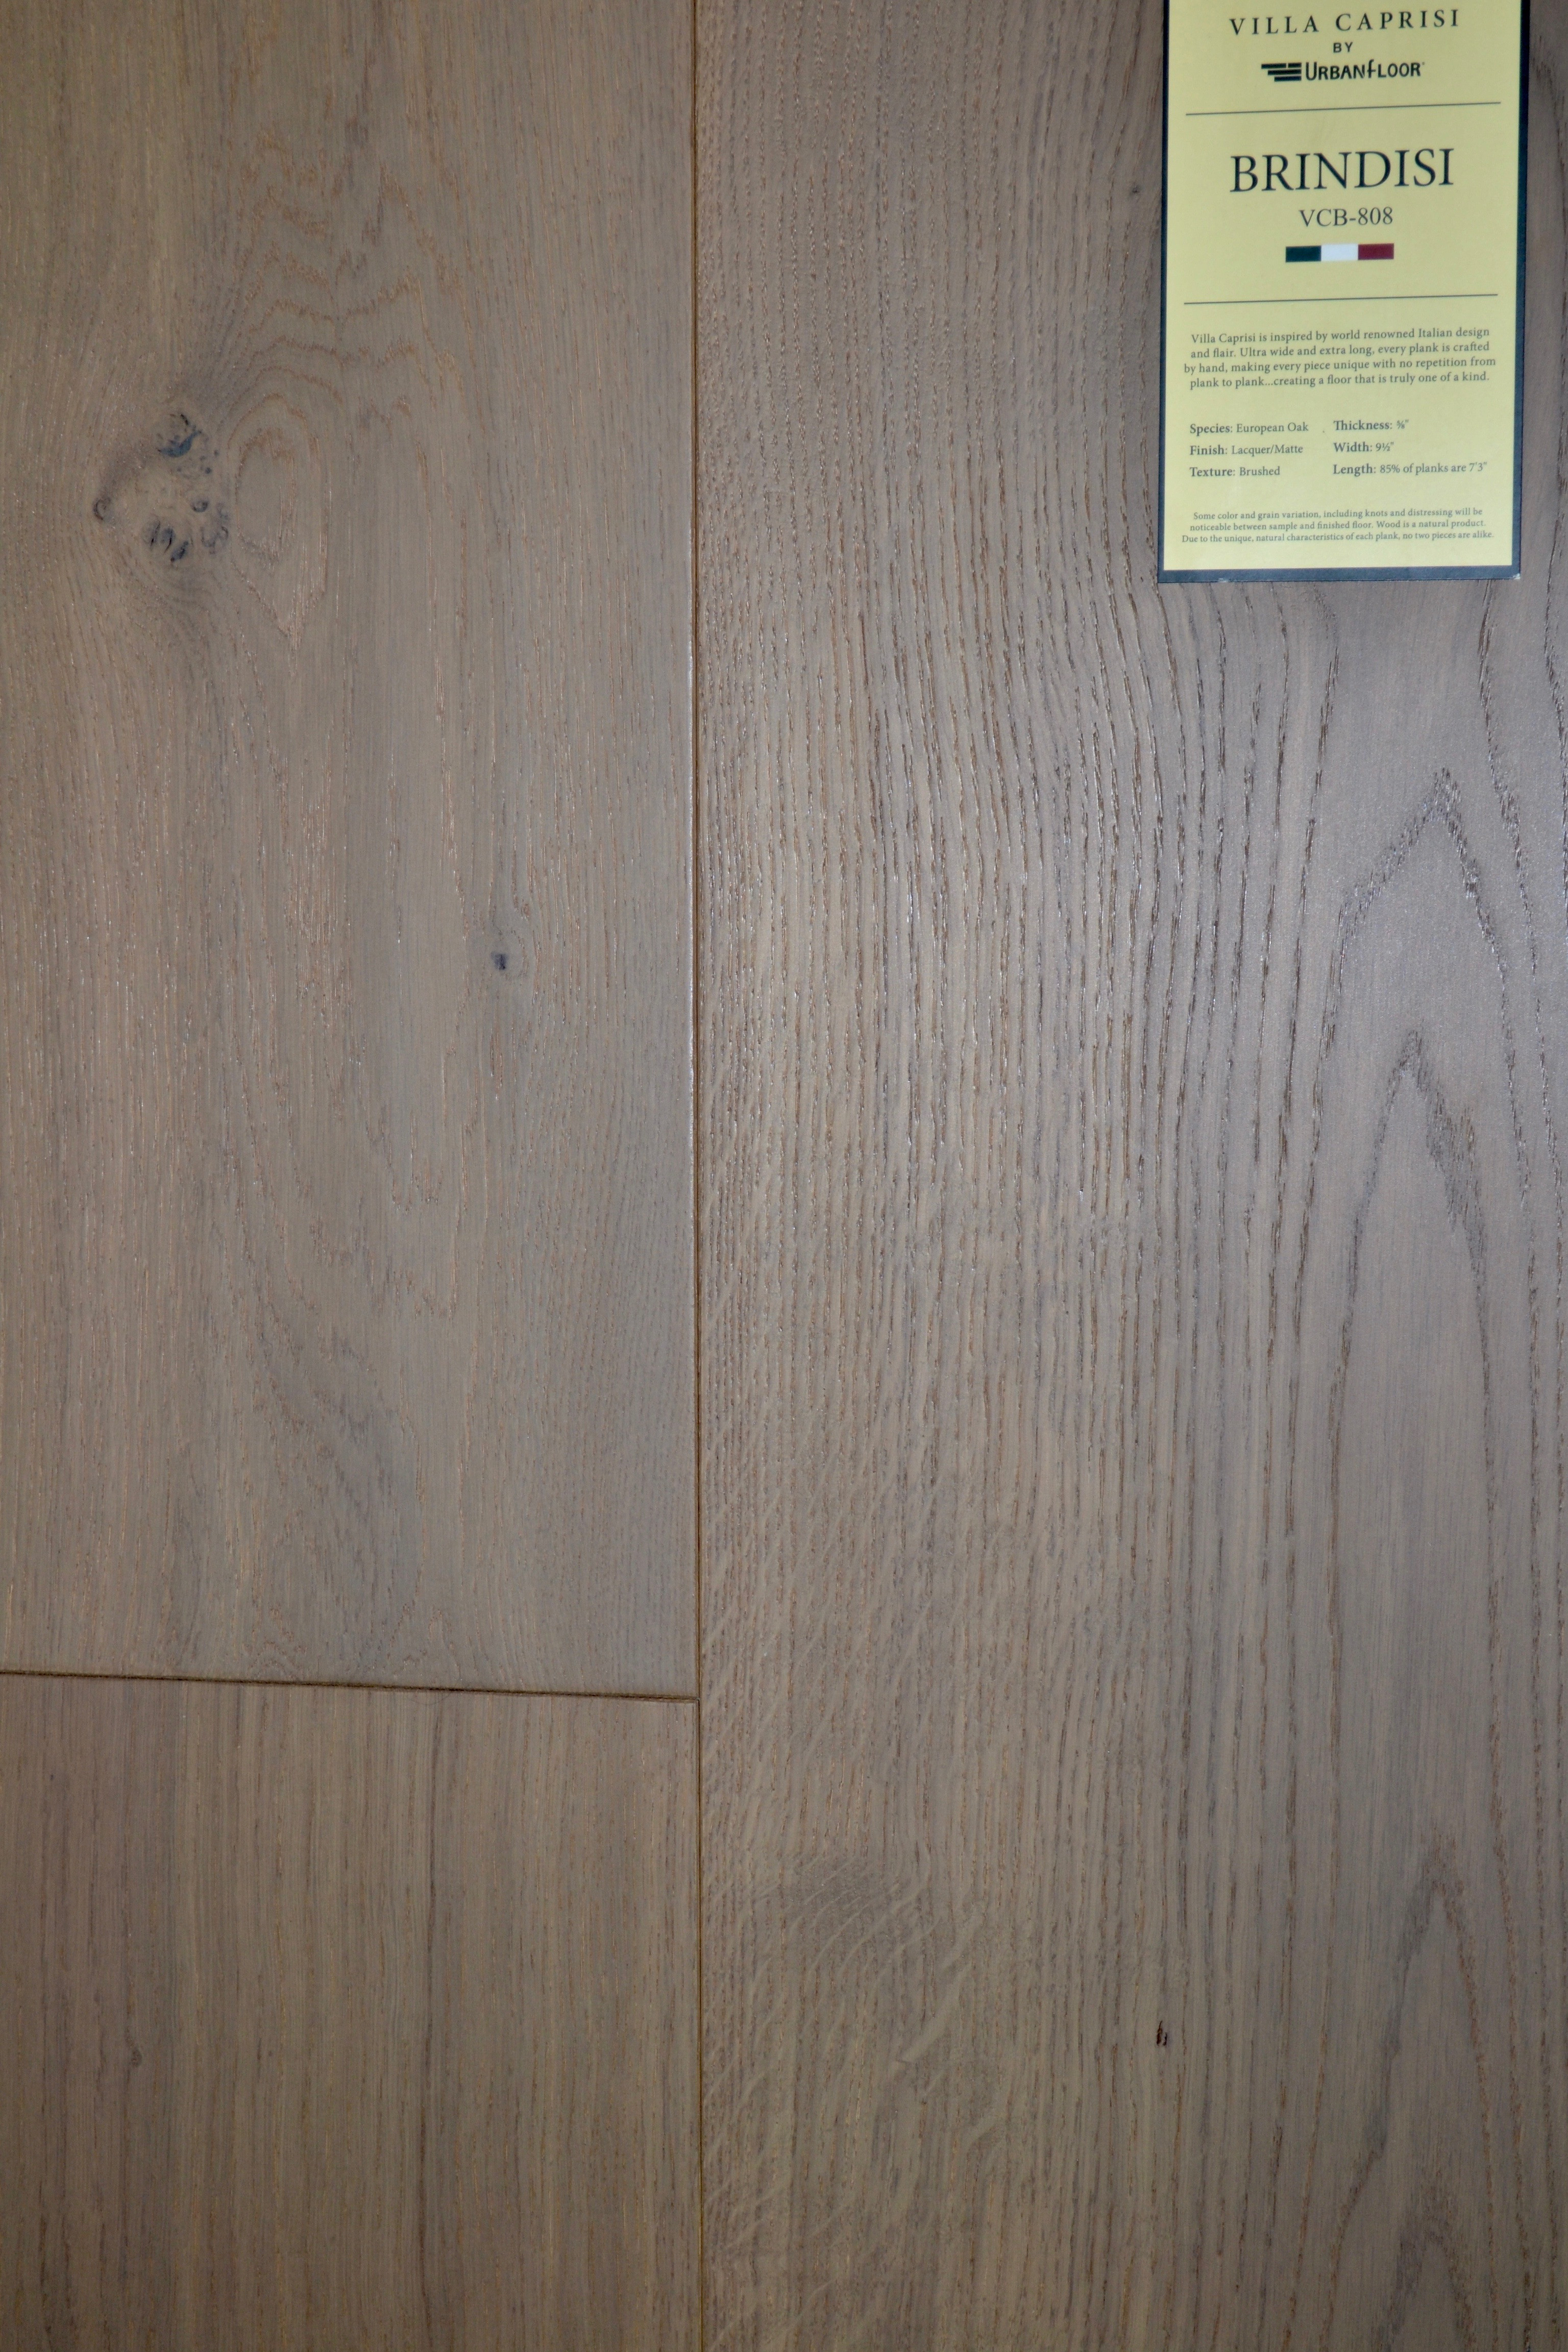 light colored engineered hardwood flooring of villa caprisi fine european hardwood millennium hardwood intended for european style inspired designer oak floor brindisi by villa caprisi